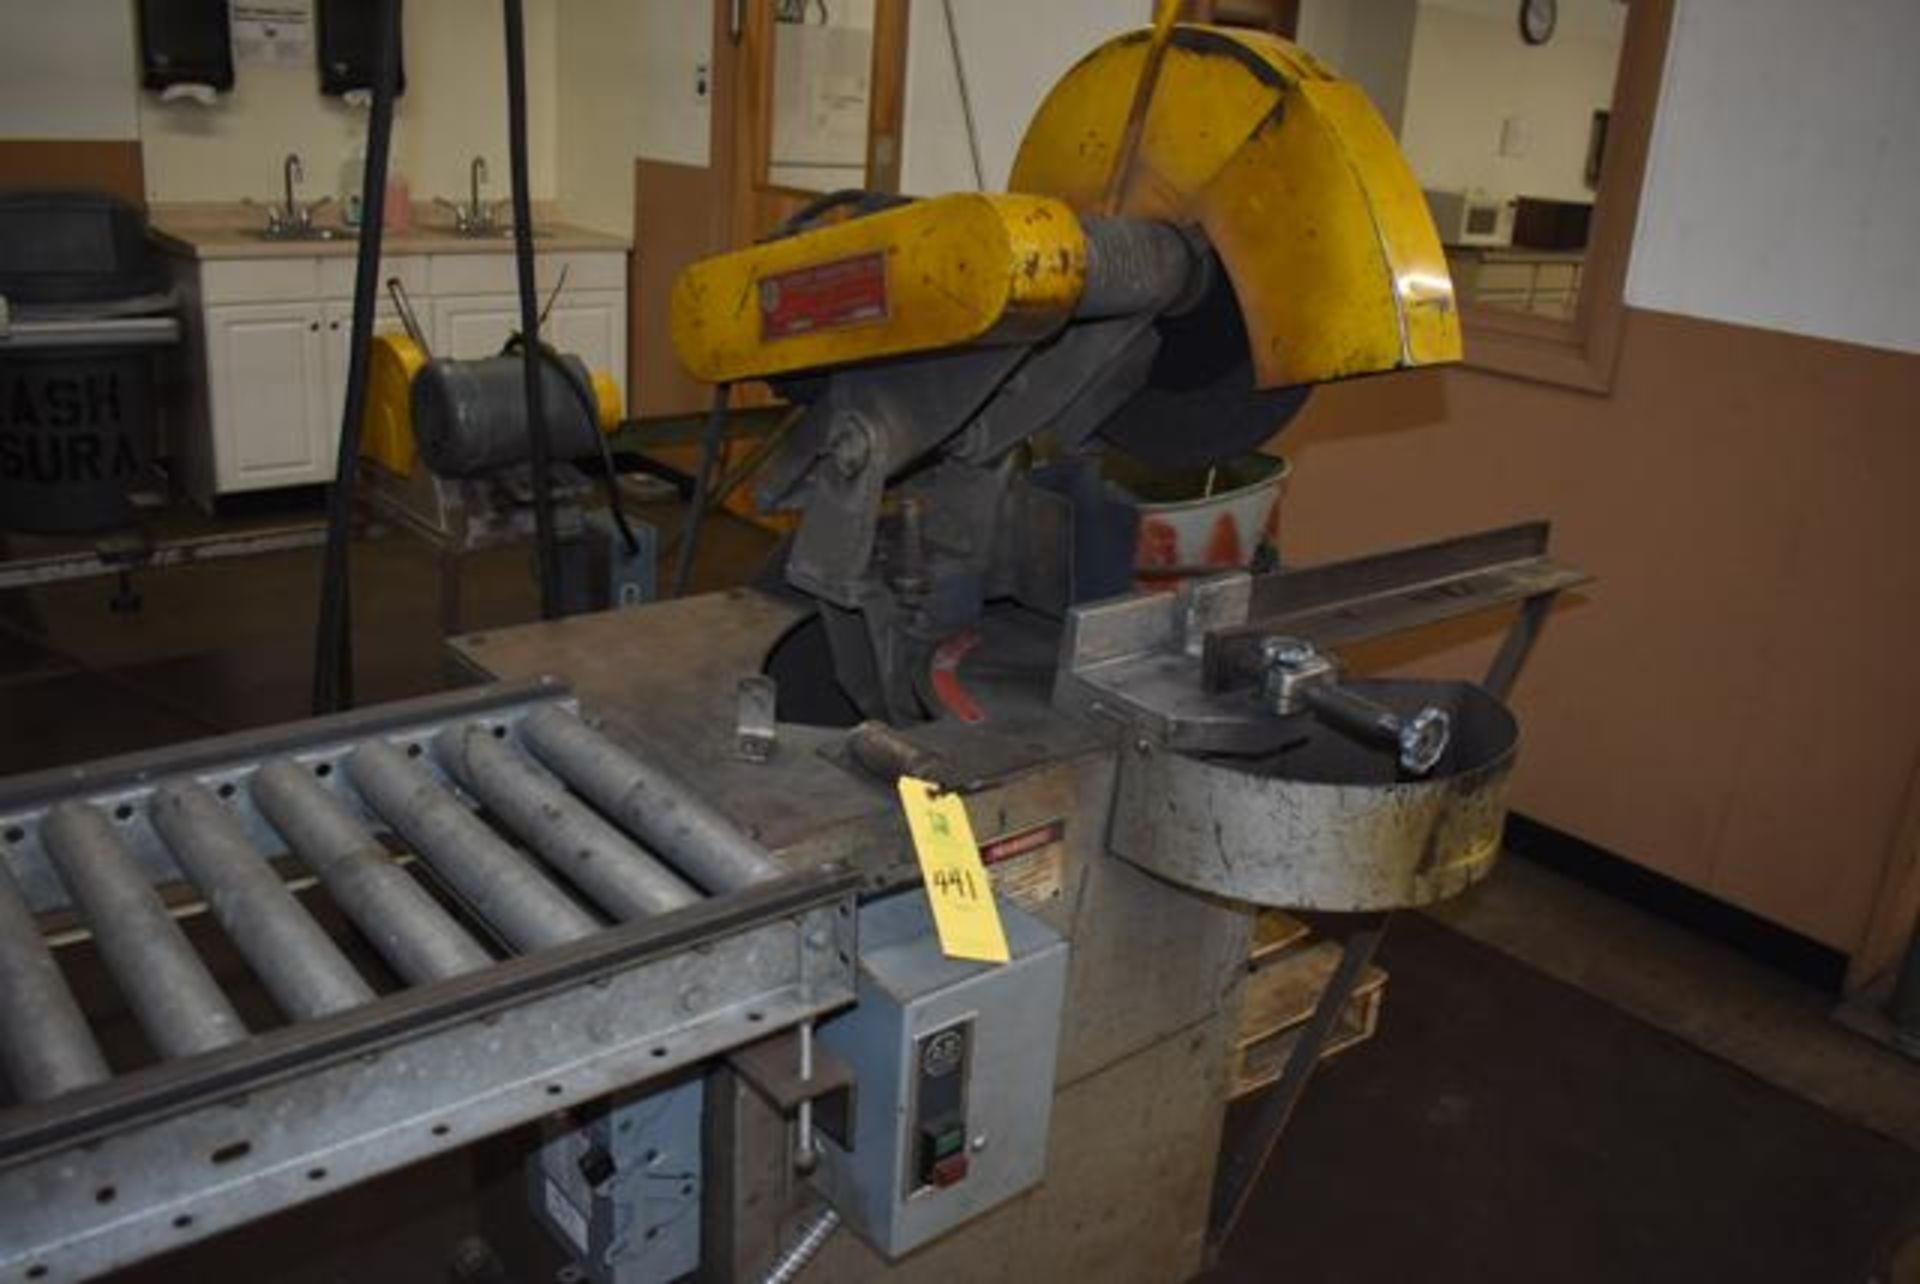 Everett Model #16 Abrasive Cut-Off Saw, Includes Roller Conveyor, Loading Fee: $200 - Image 2 of 2